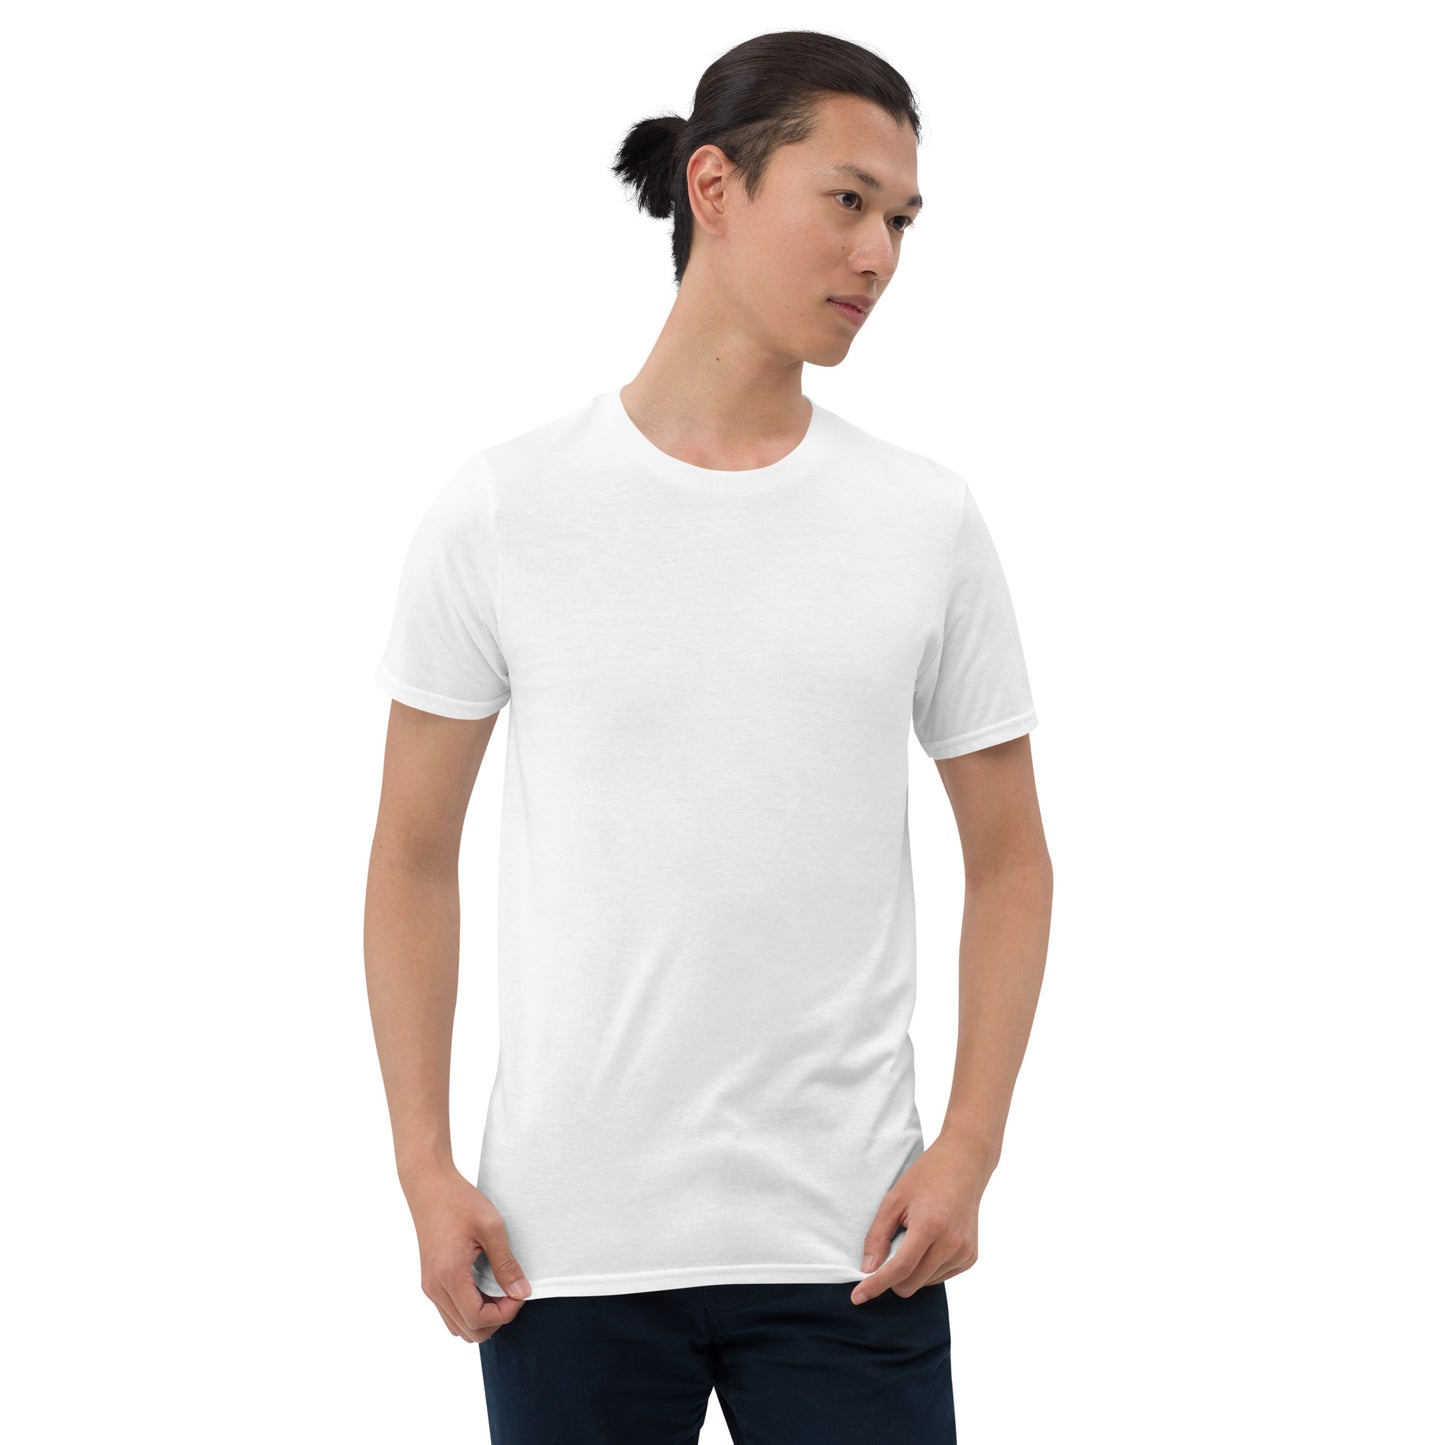 National Pet day Short-Sleeve Unisex T-Shirt